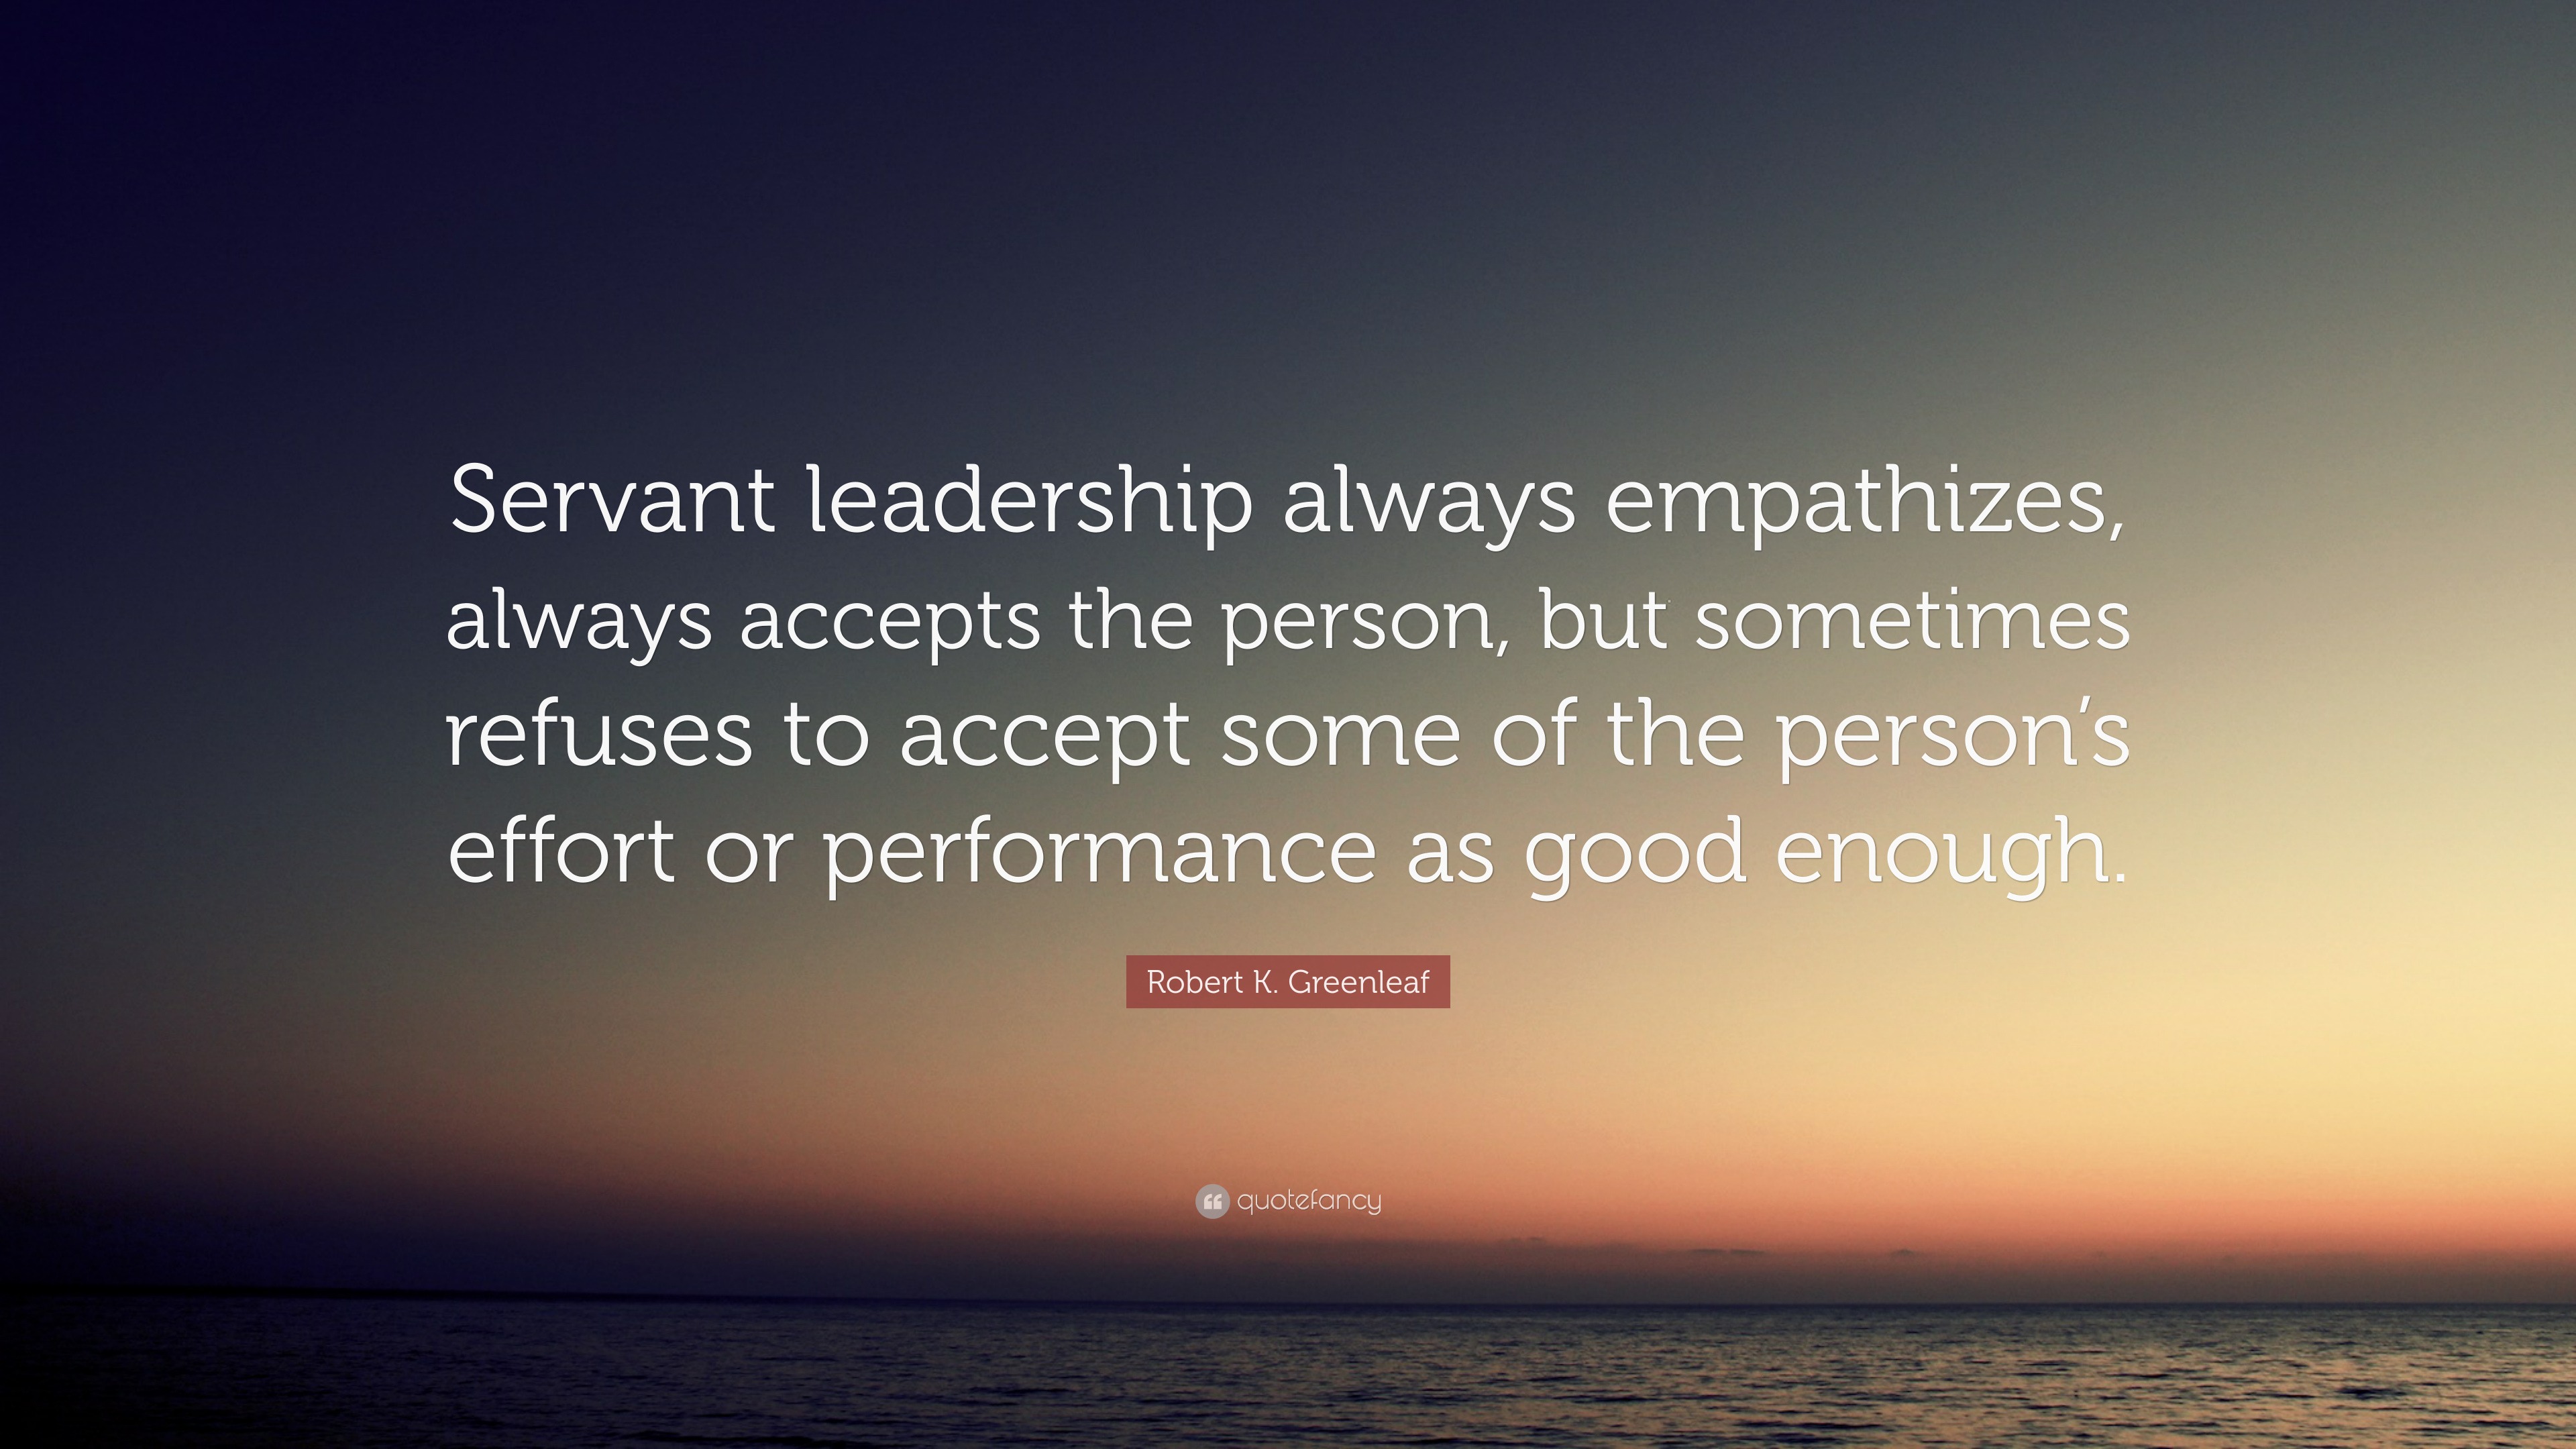 Robert K. Greenleaf Quote “Servant leadership always